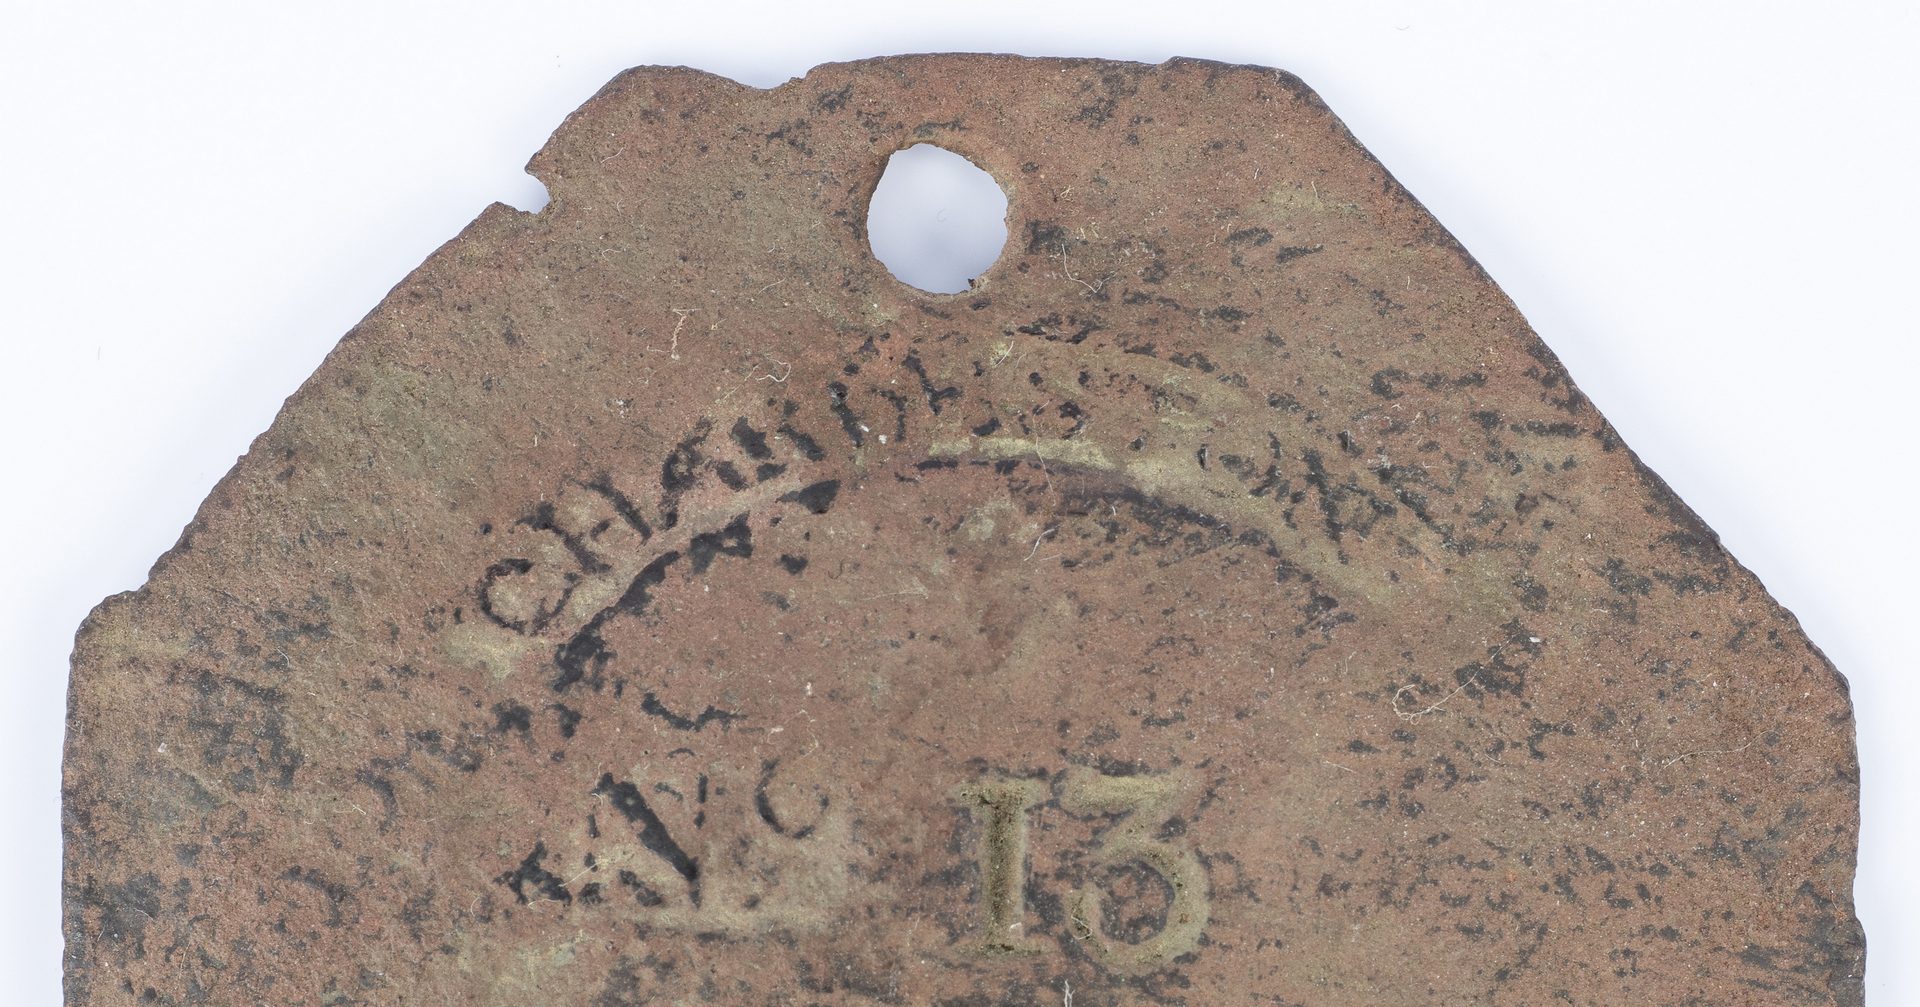 Lot 339: 1805 Charleston C. Prince Porter Slave Hire Badge, Number 13